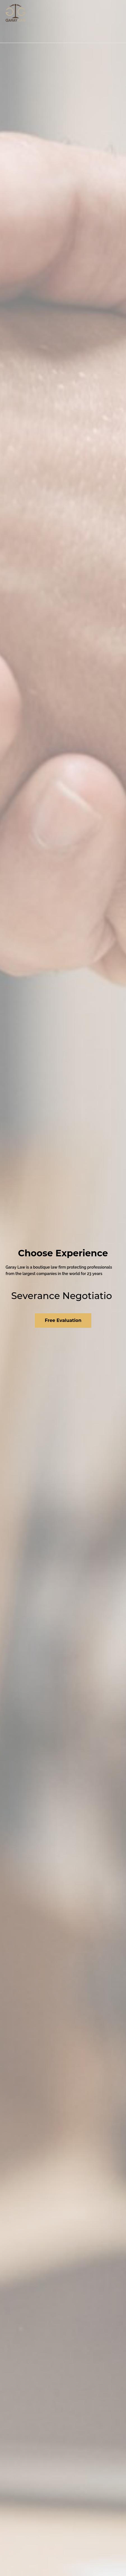 Garay Law - East Palo Alto CA Lawyers